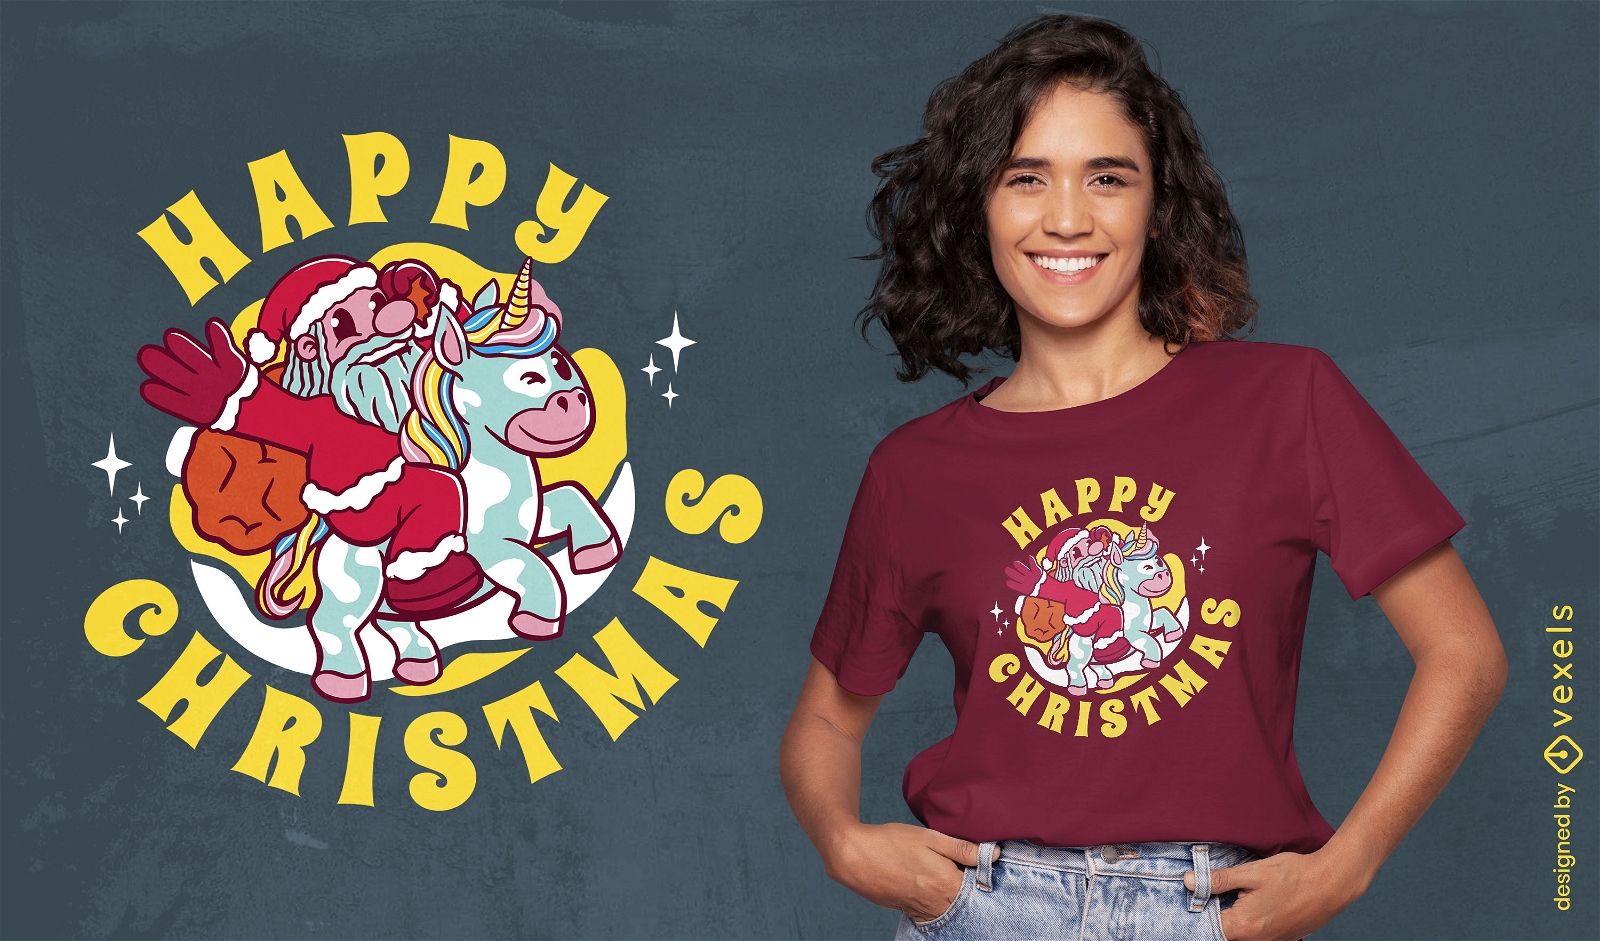 Santa claus riding unicorn t-shirt design